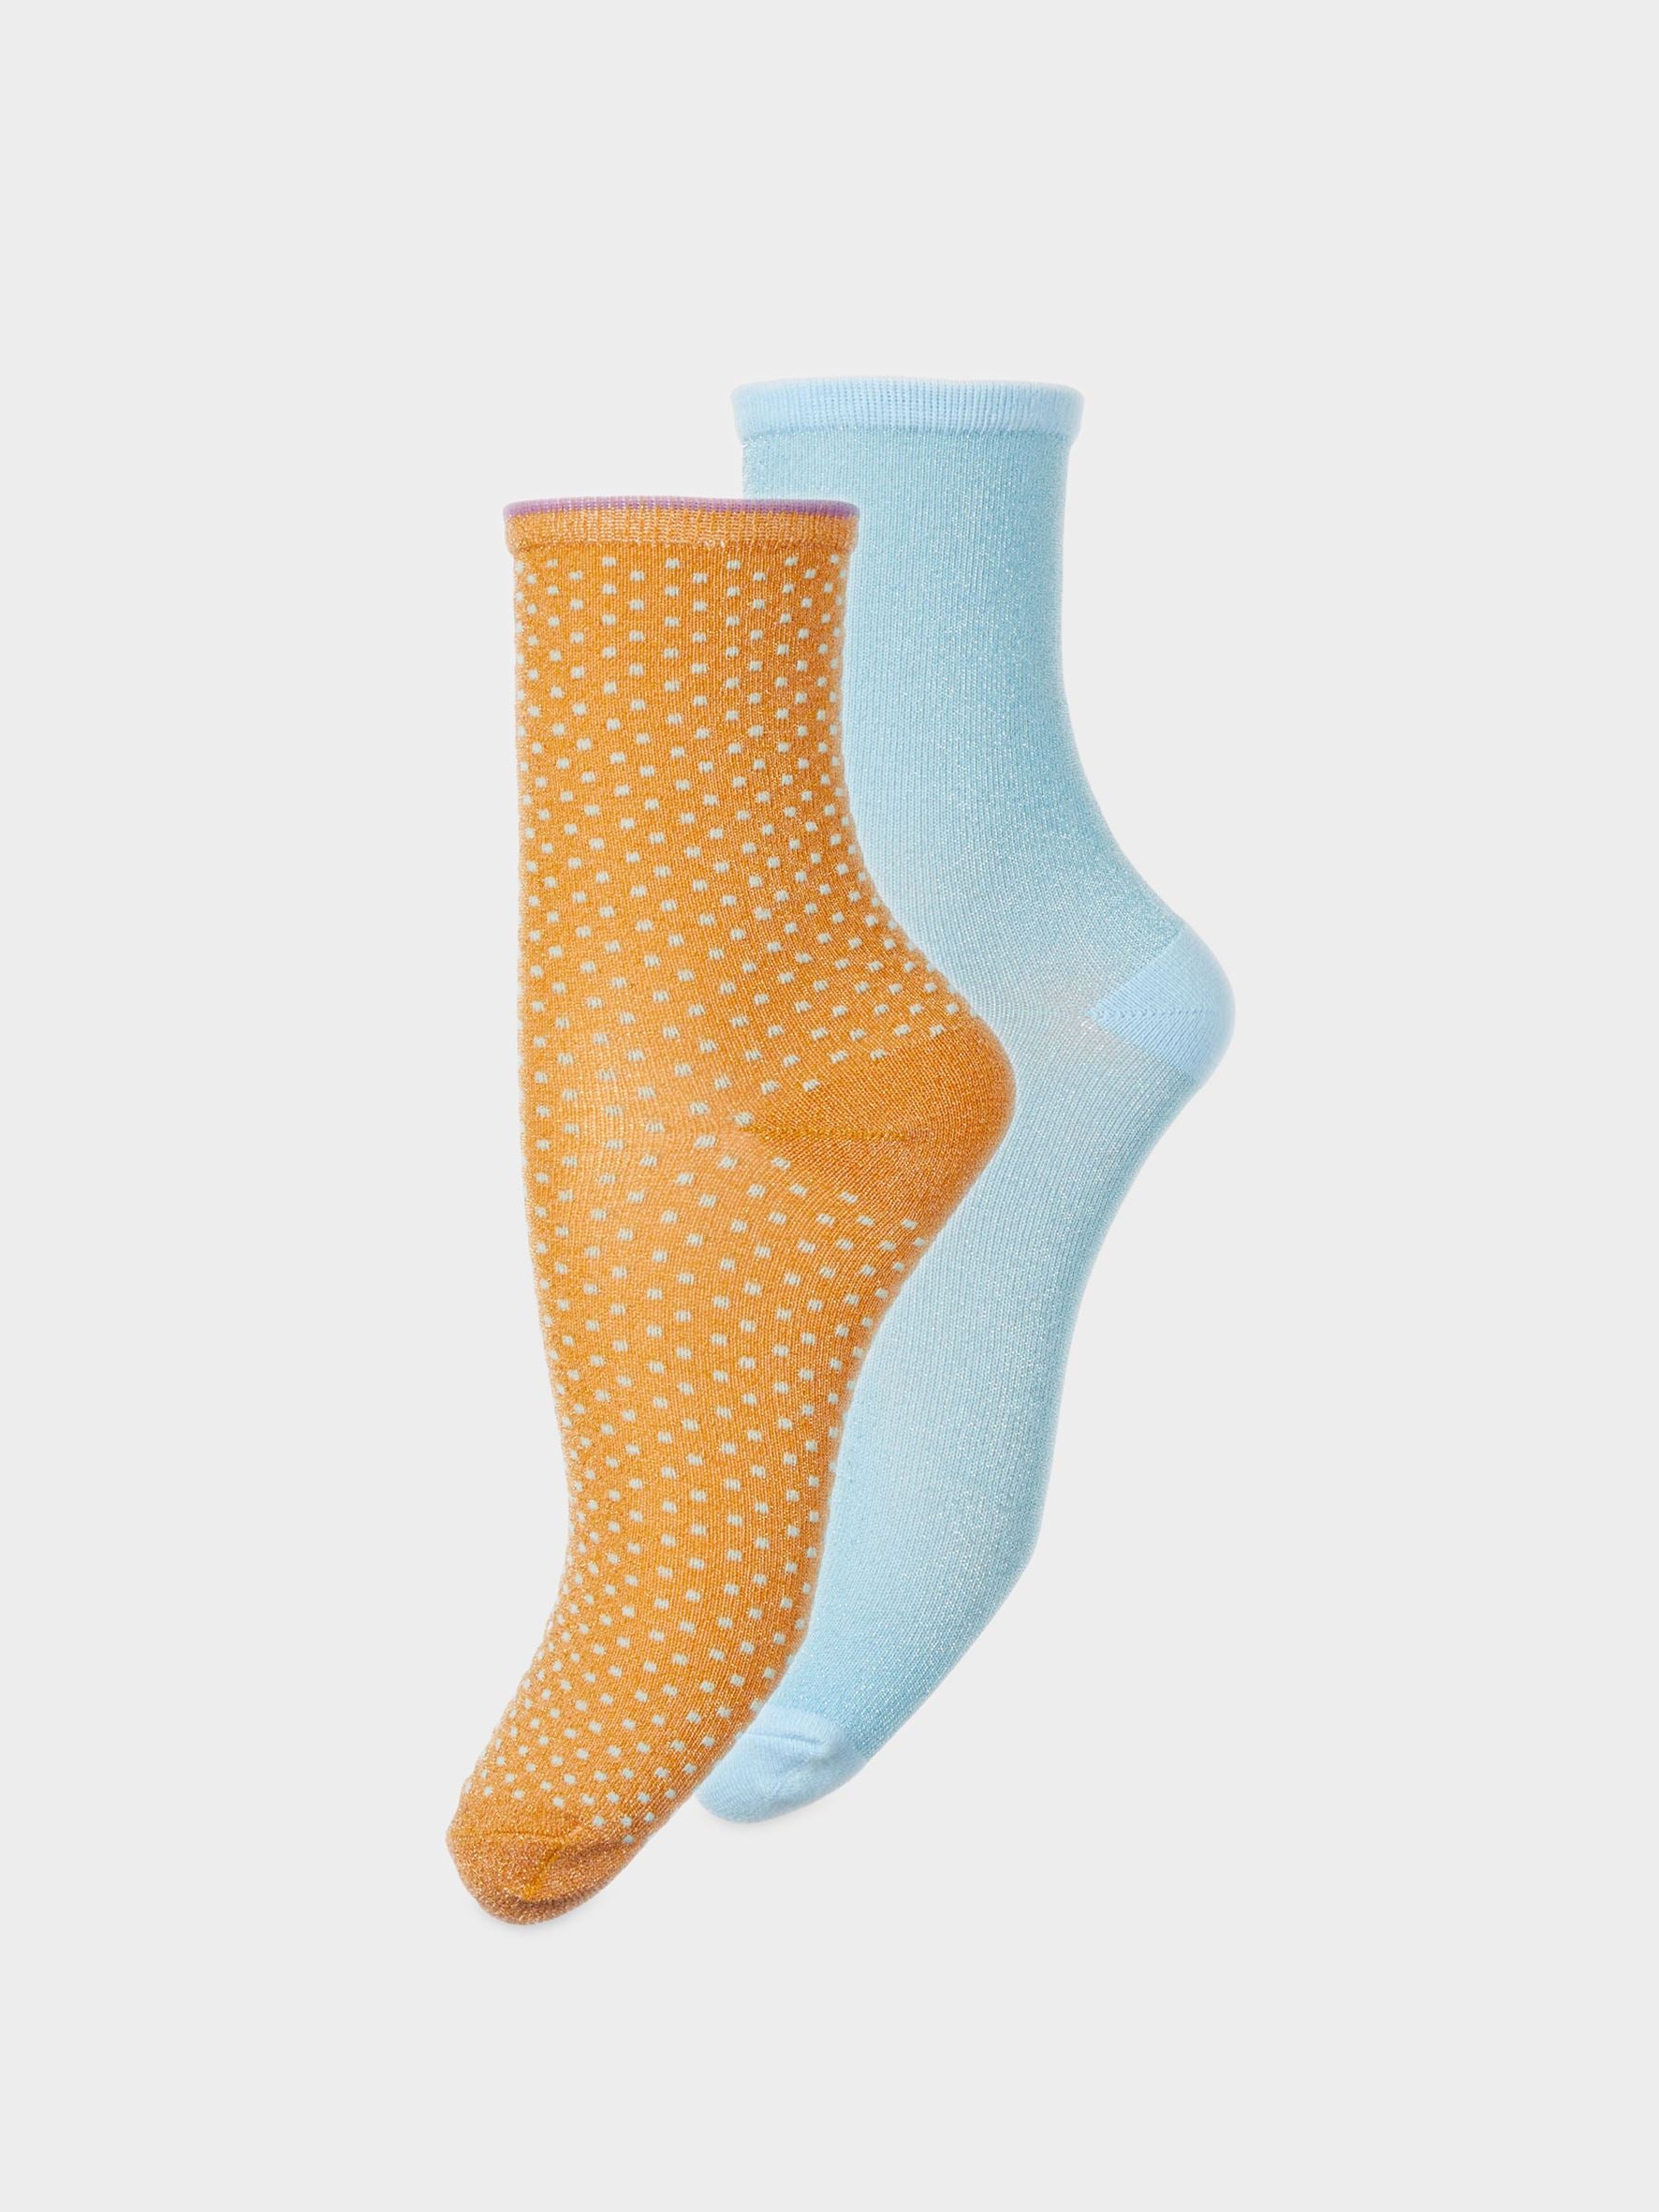 Becksöndergaard, Dina Solid + Dot Sock 2 Pack - Blue/Autumn, socks, archive, archive, sale, sale, socks